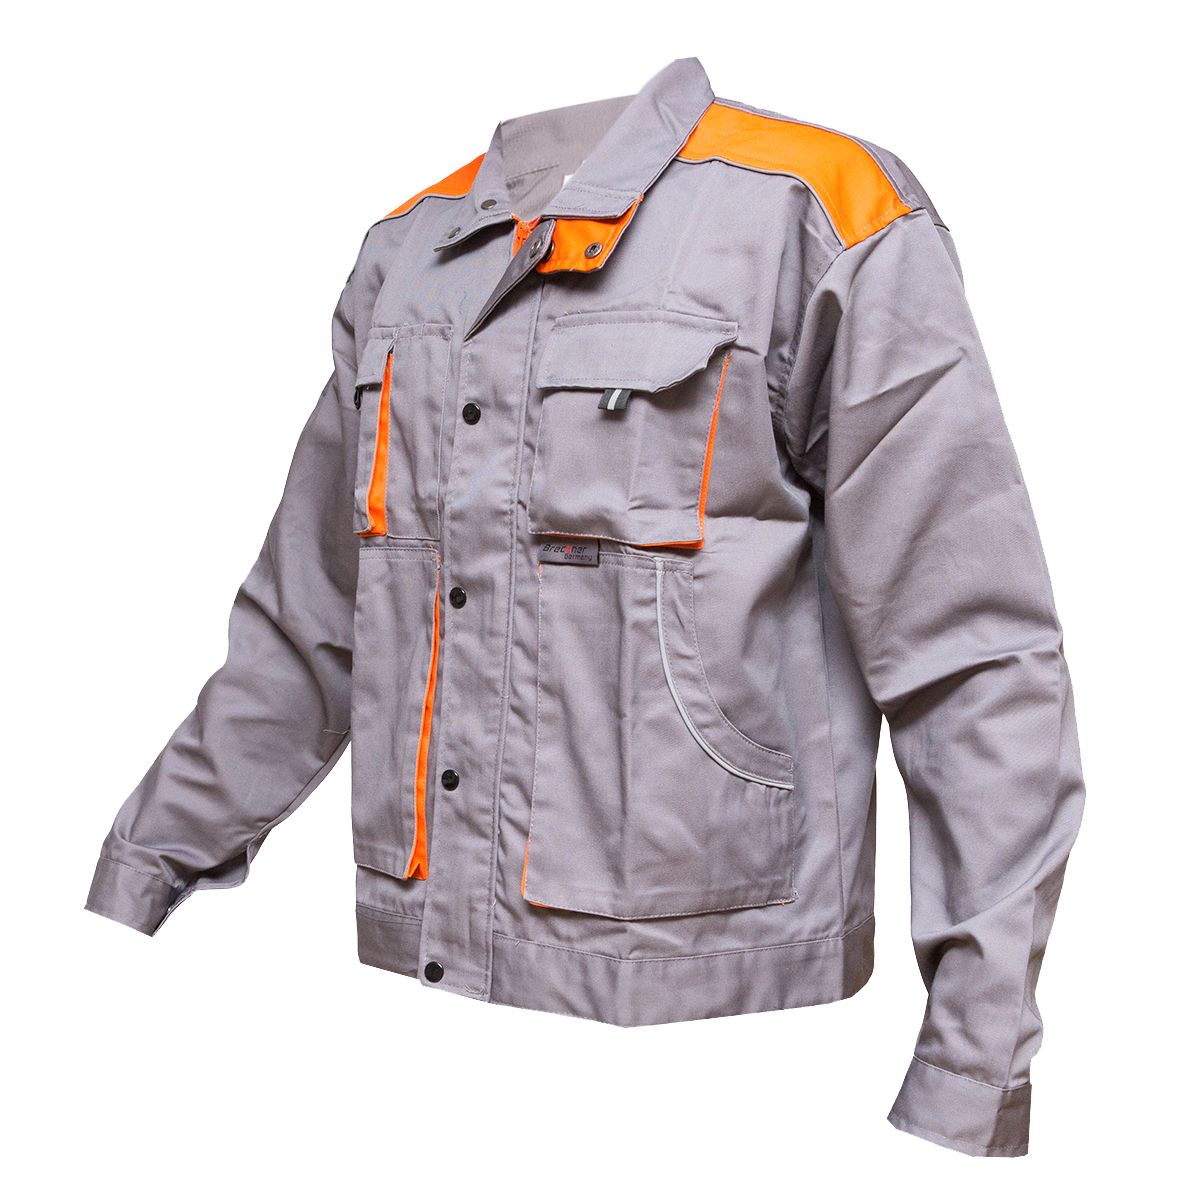 Jacheta de lucru poliester cu bumbac, gri/portocaliu marimea 56, 235g/m2 Breckner Germany